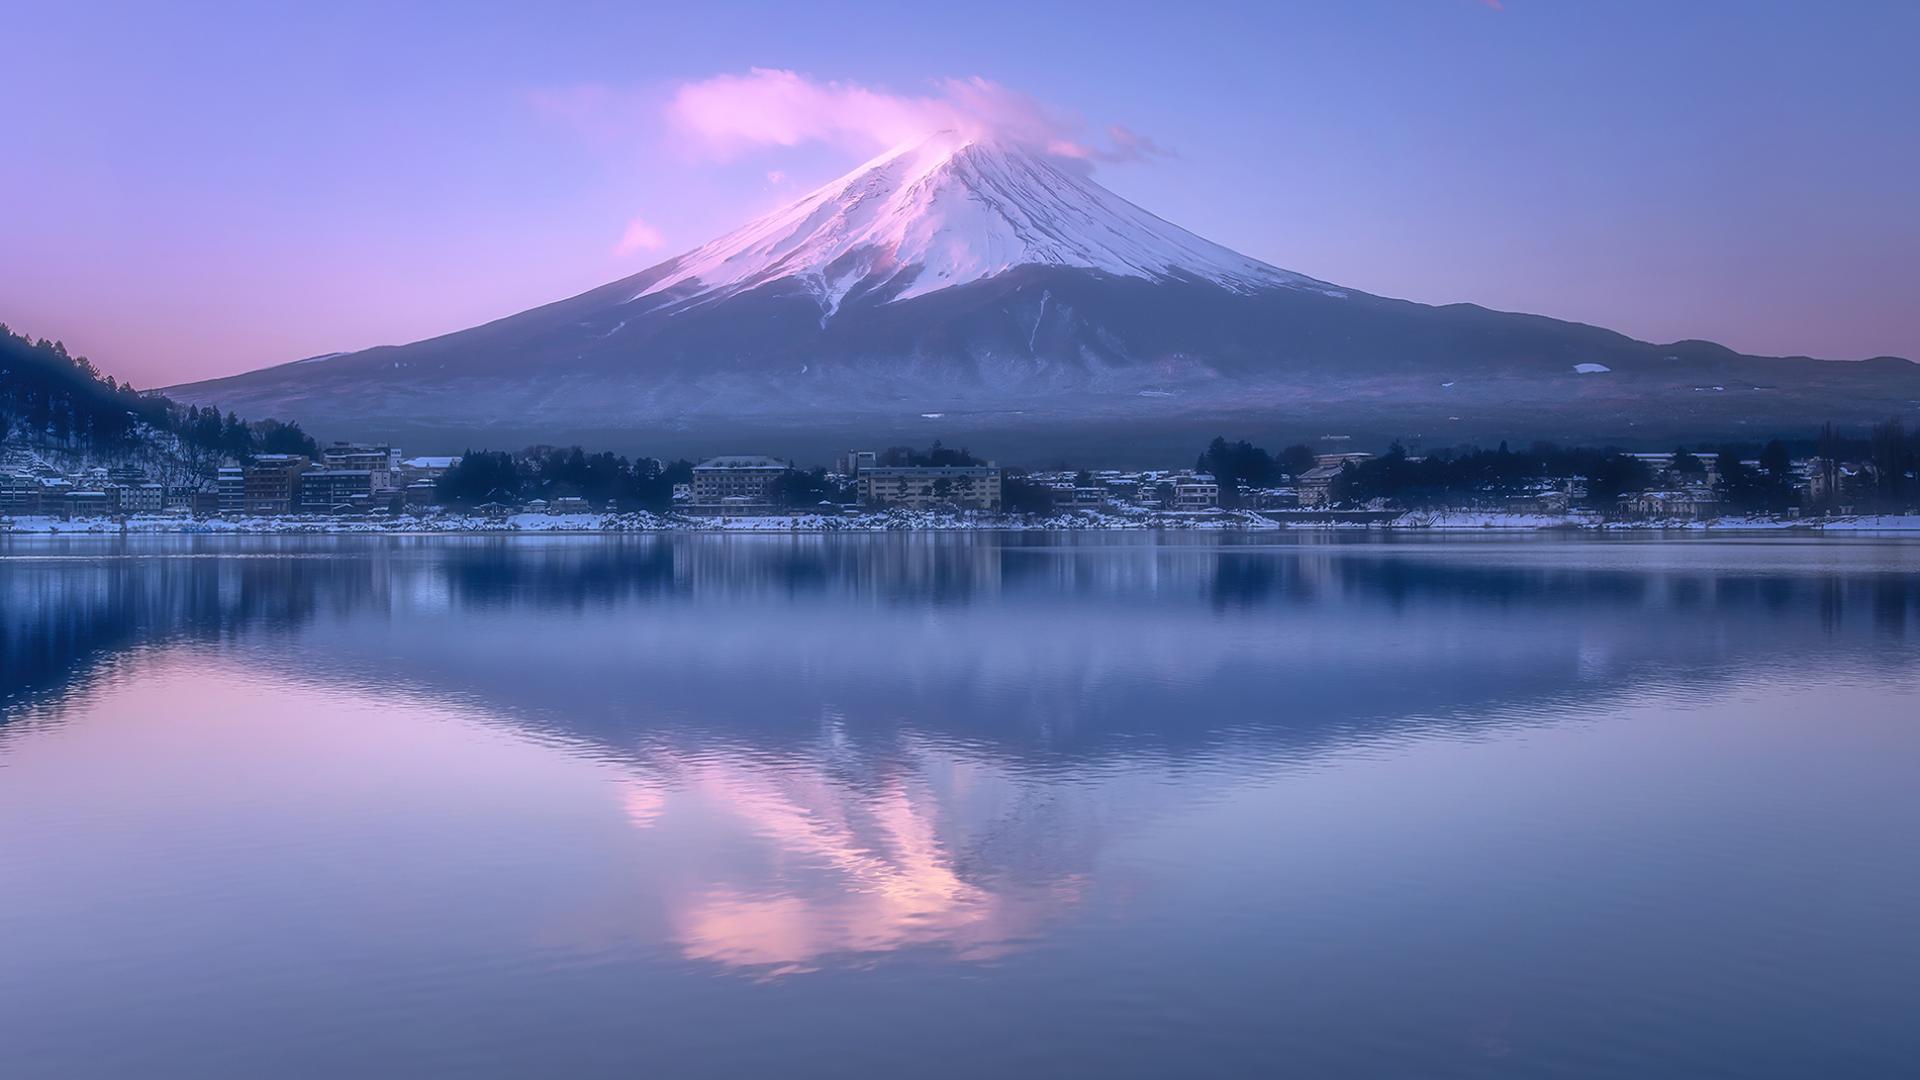 European Photography Awards Winner - The Beauty of Mount Fuji